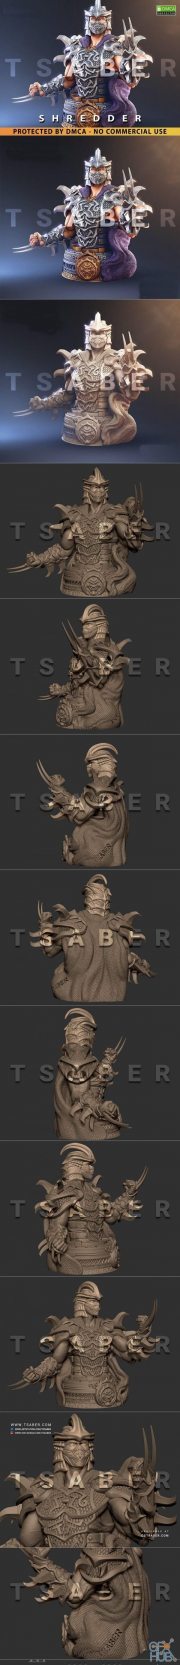 Shredder Bust – 3D Print